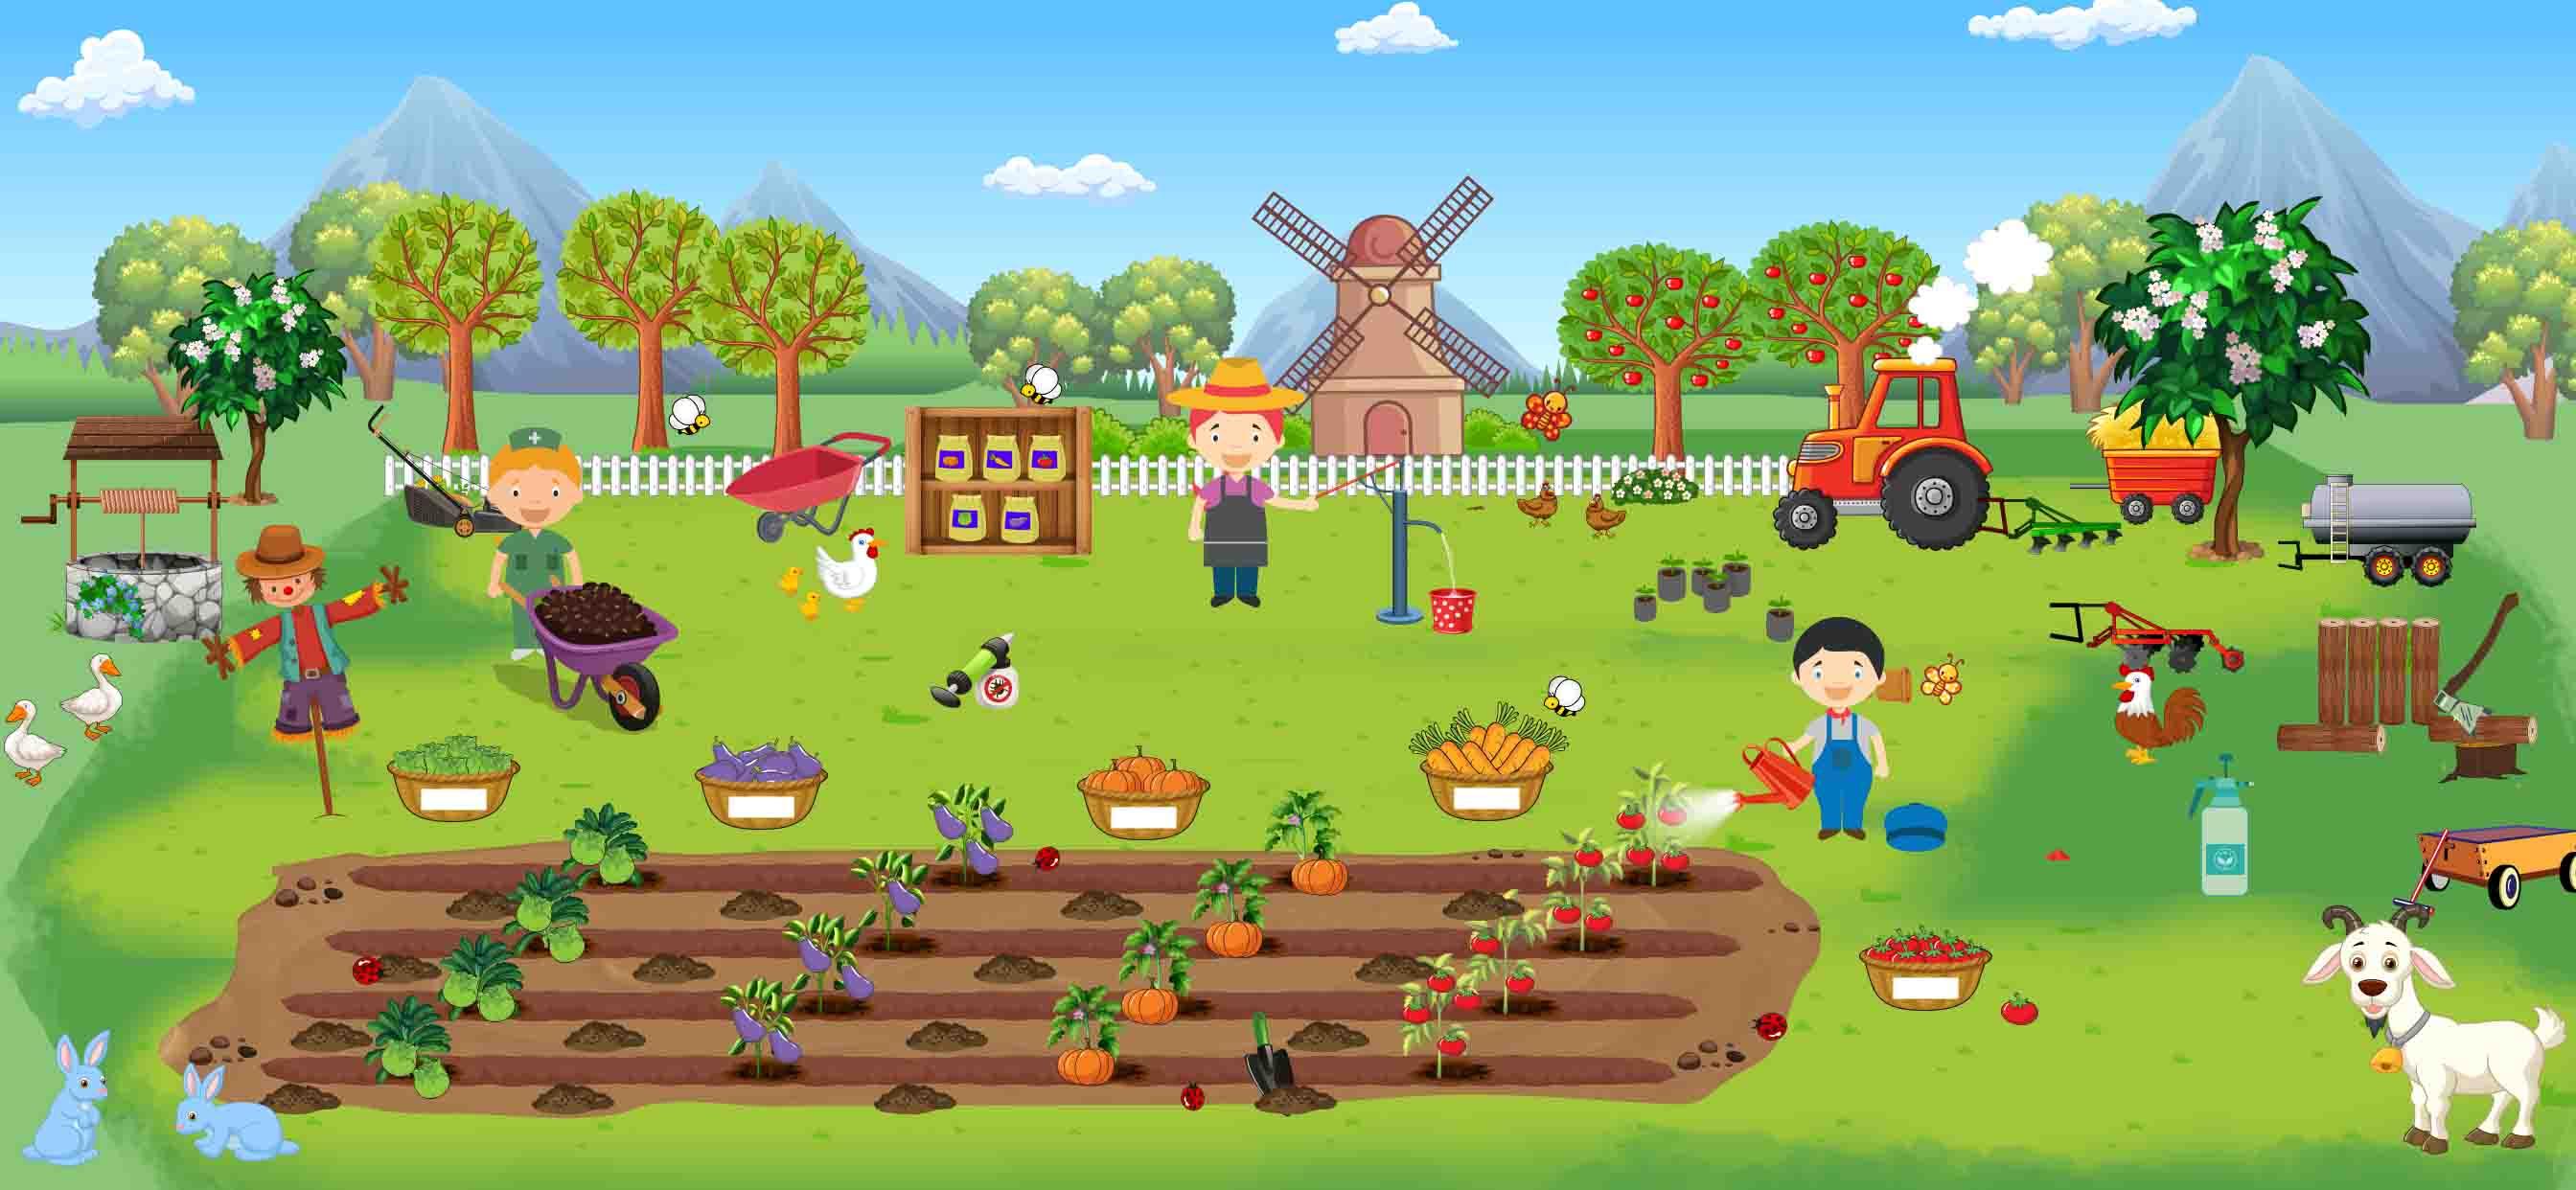 Pretend Town Farm House: Explore Farming World 1.1 Screenshot 13